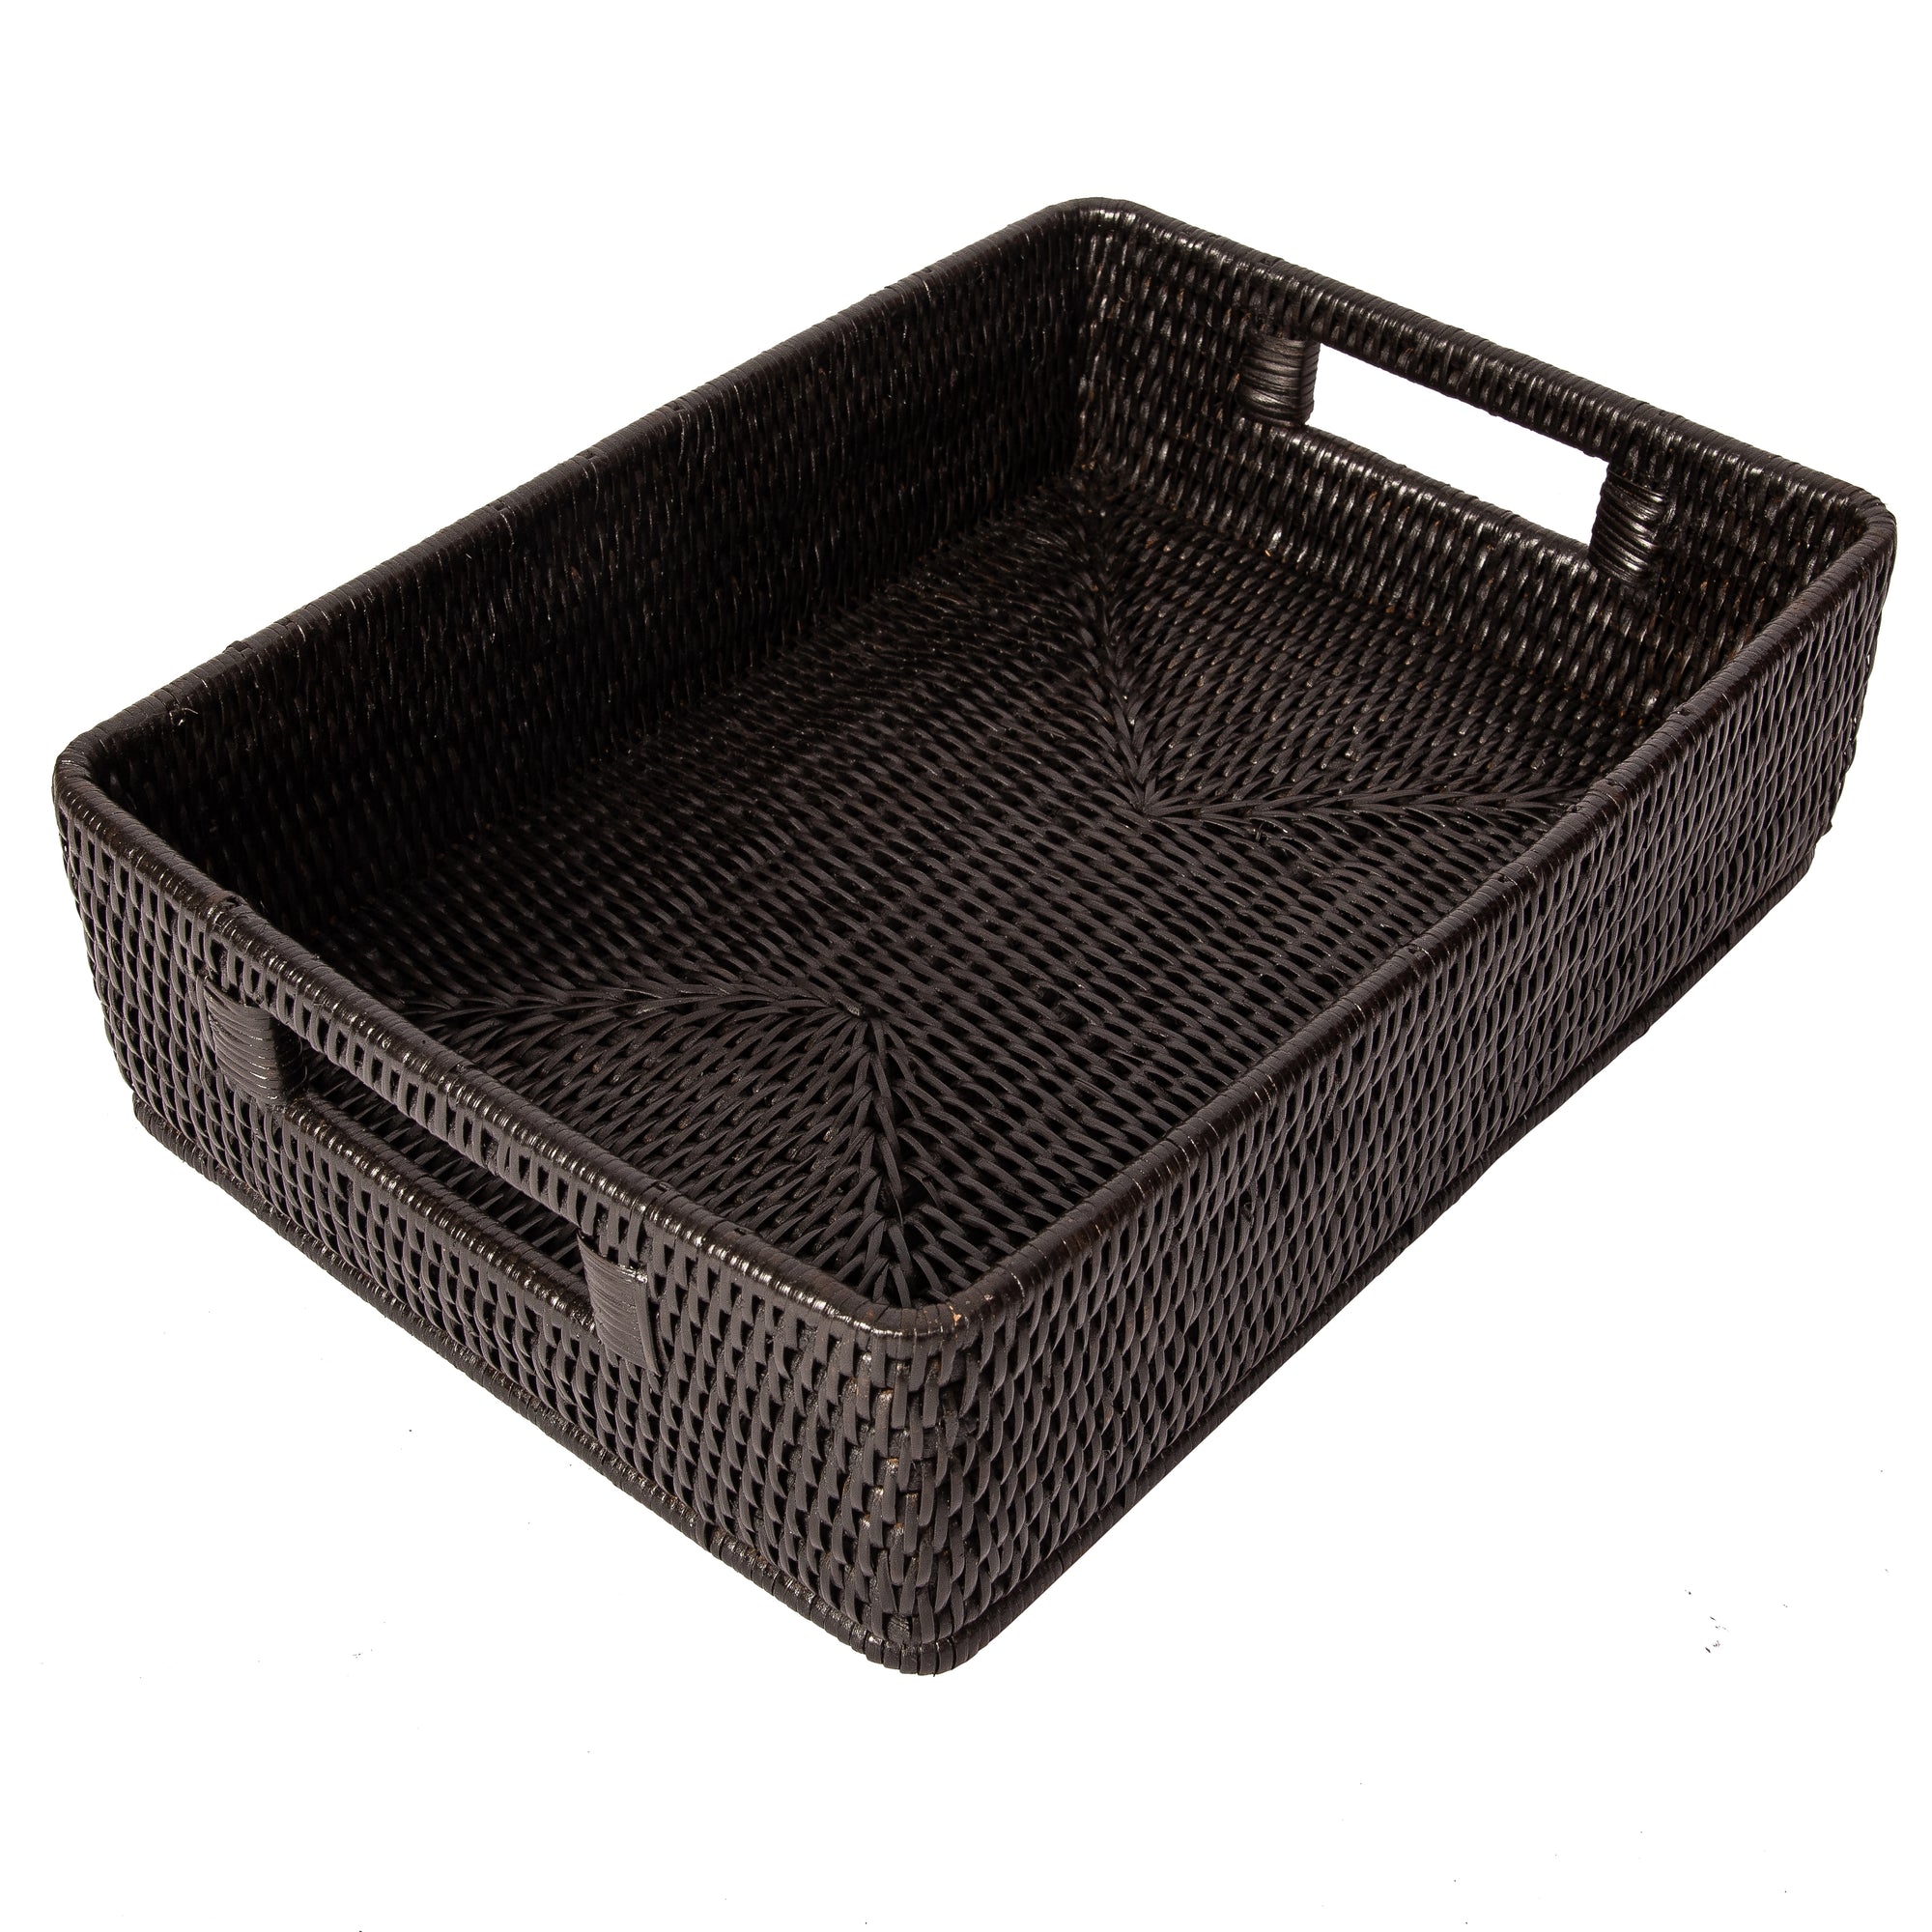 North American Black Walnut Solid Wood Rattan Storage Basket